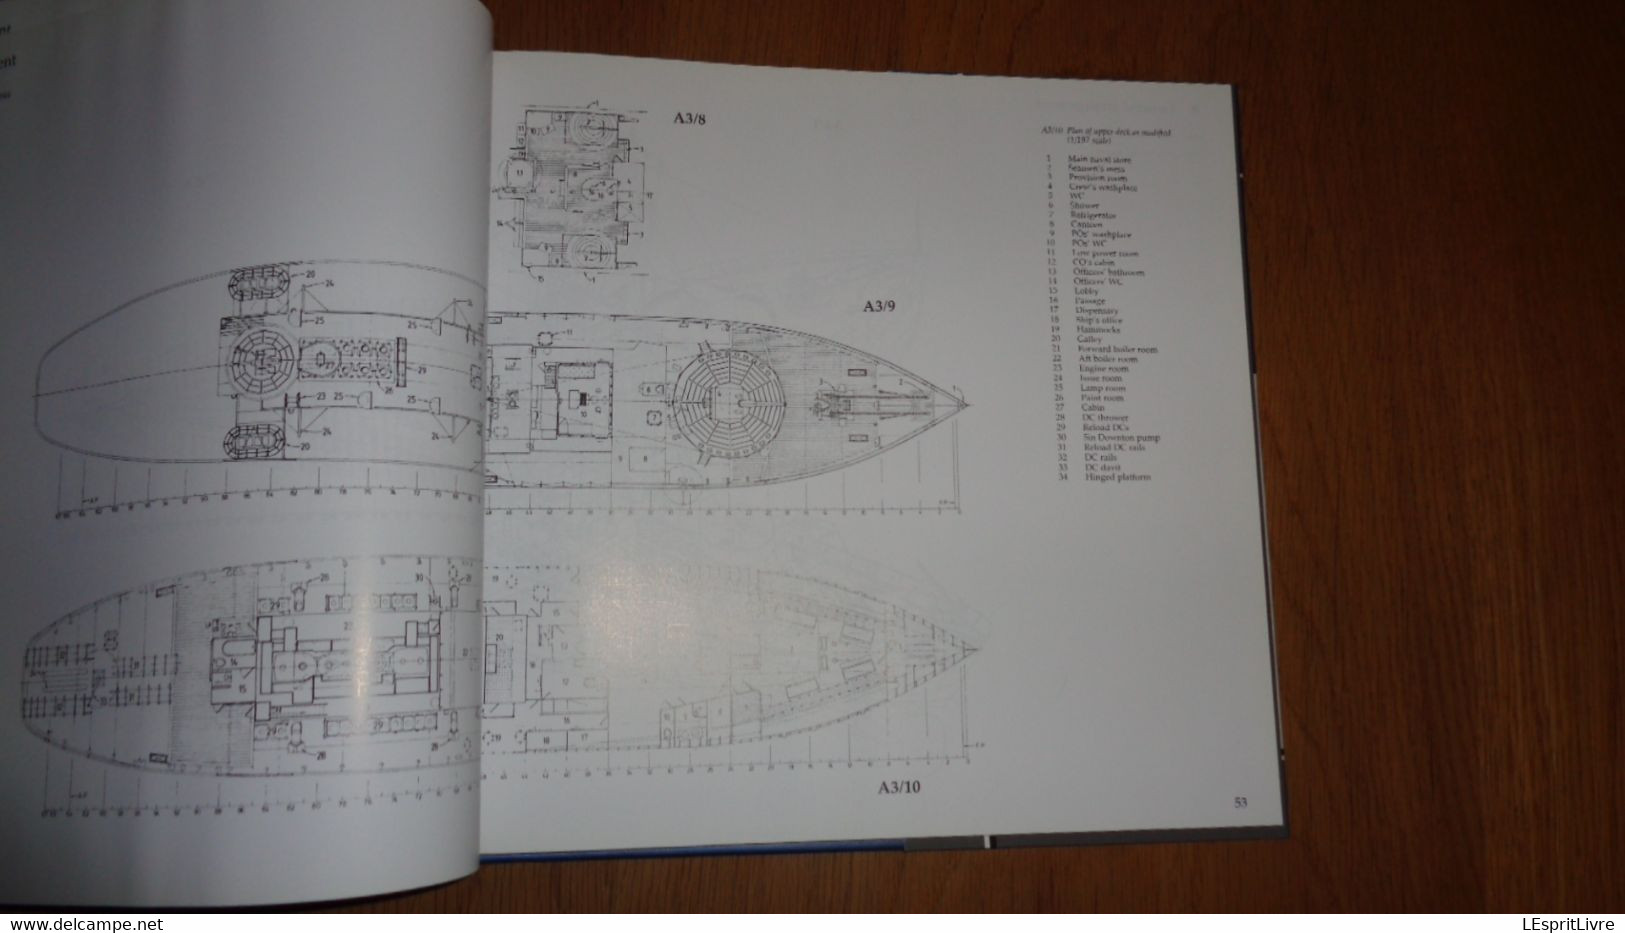 THE FLOWER CLASS CORVETTE AGASSIZ Anatomy of the Ship Marine Royal Navy Royaume Uni UK Boat Guerre 40 45 Mer Atlantique